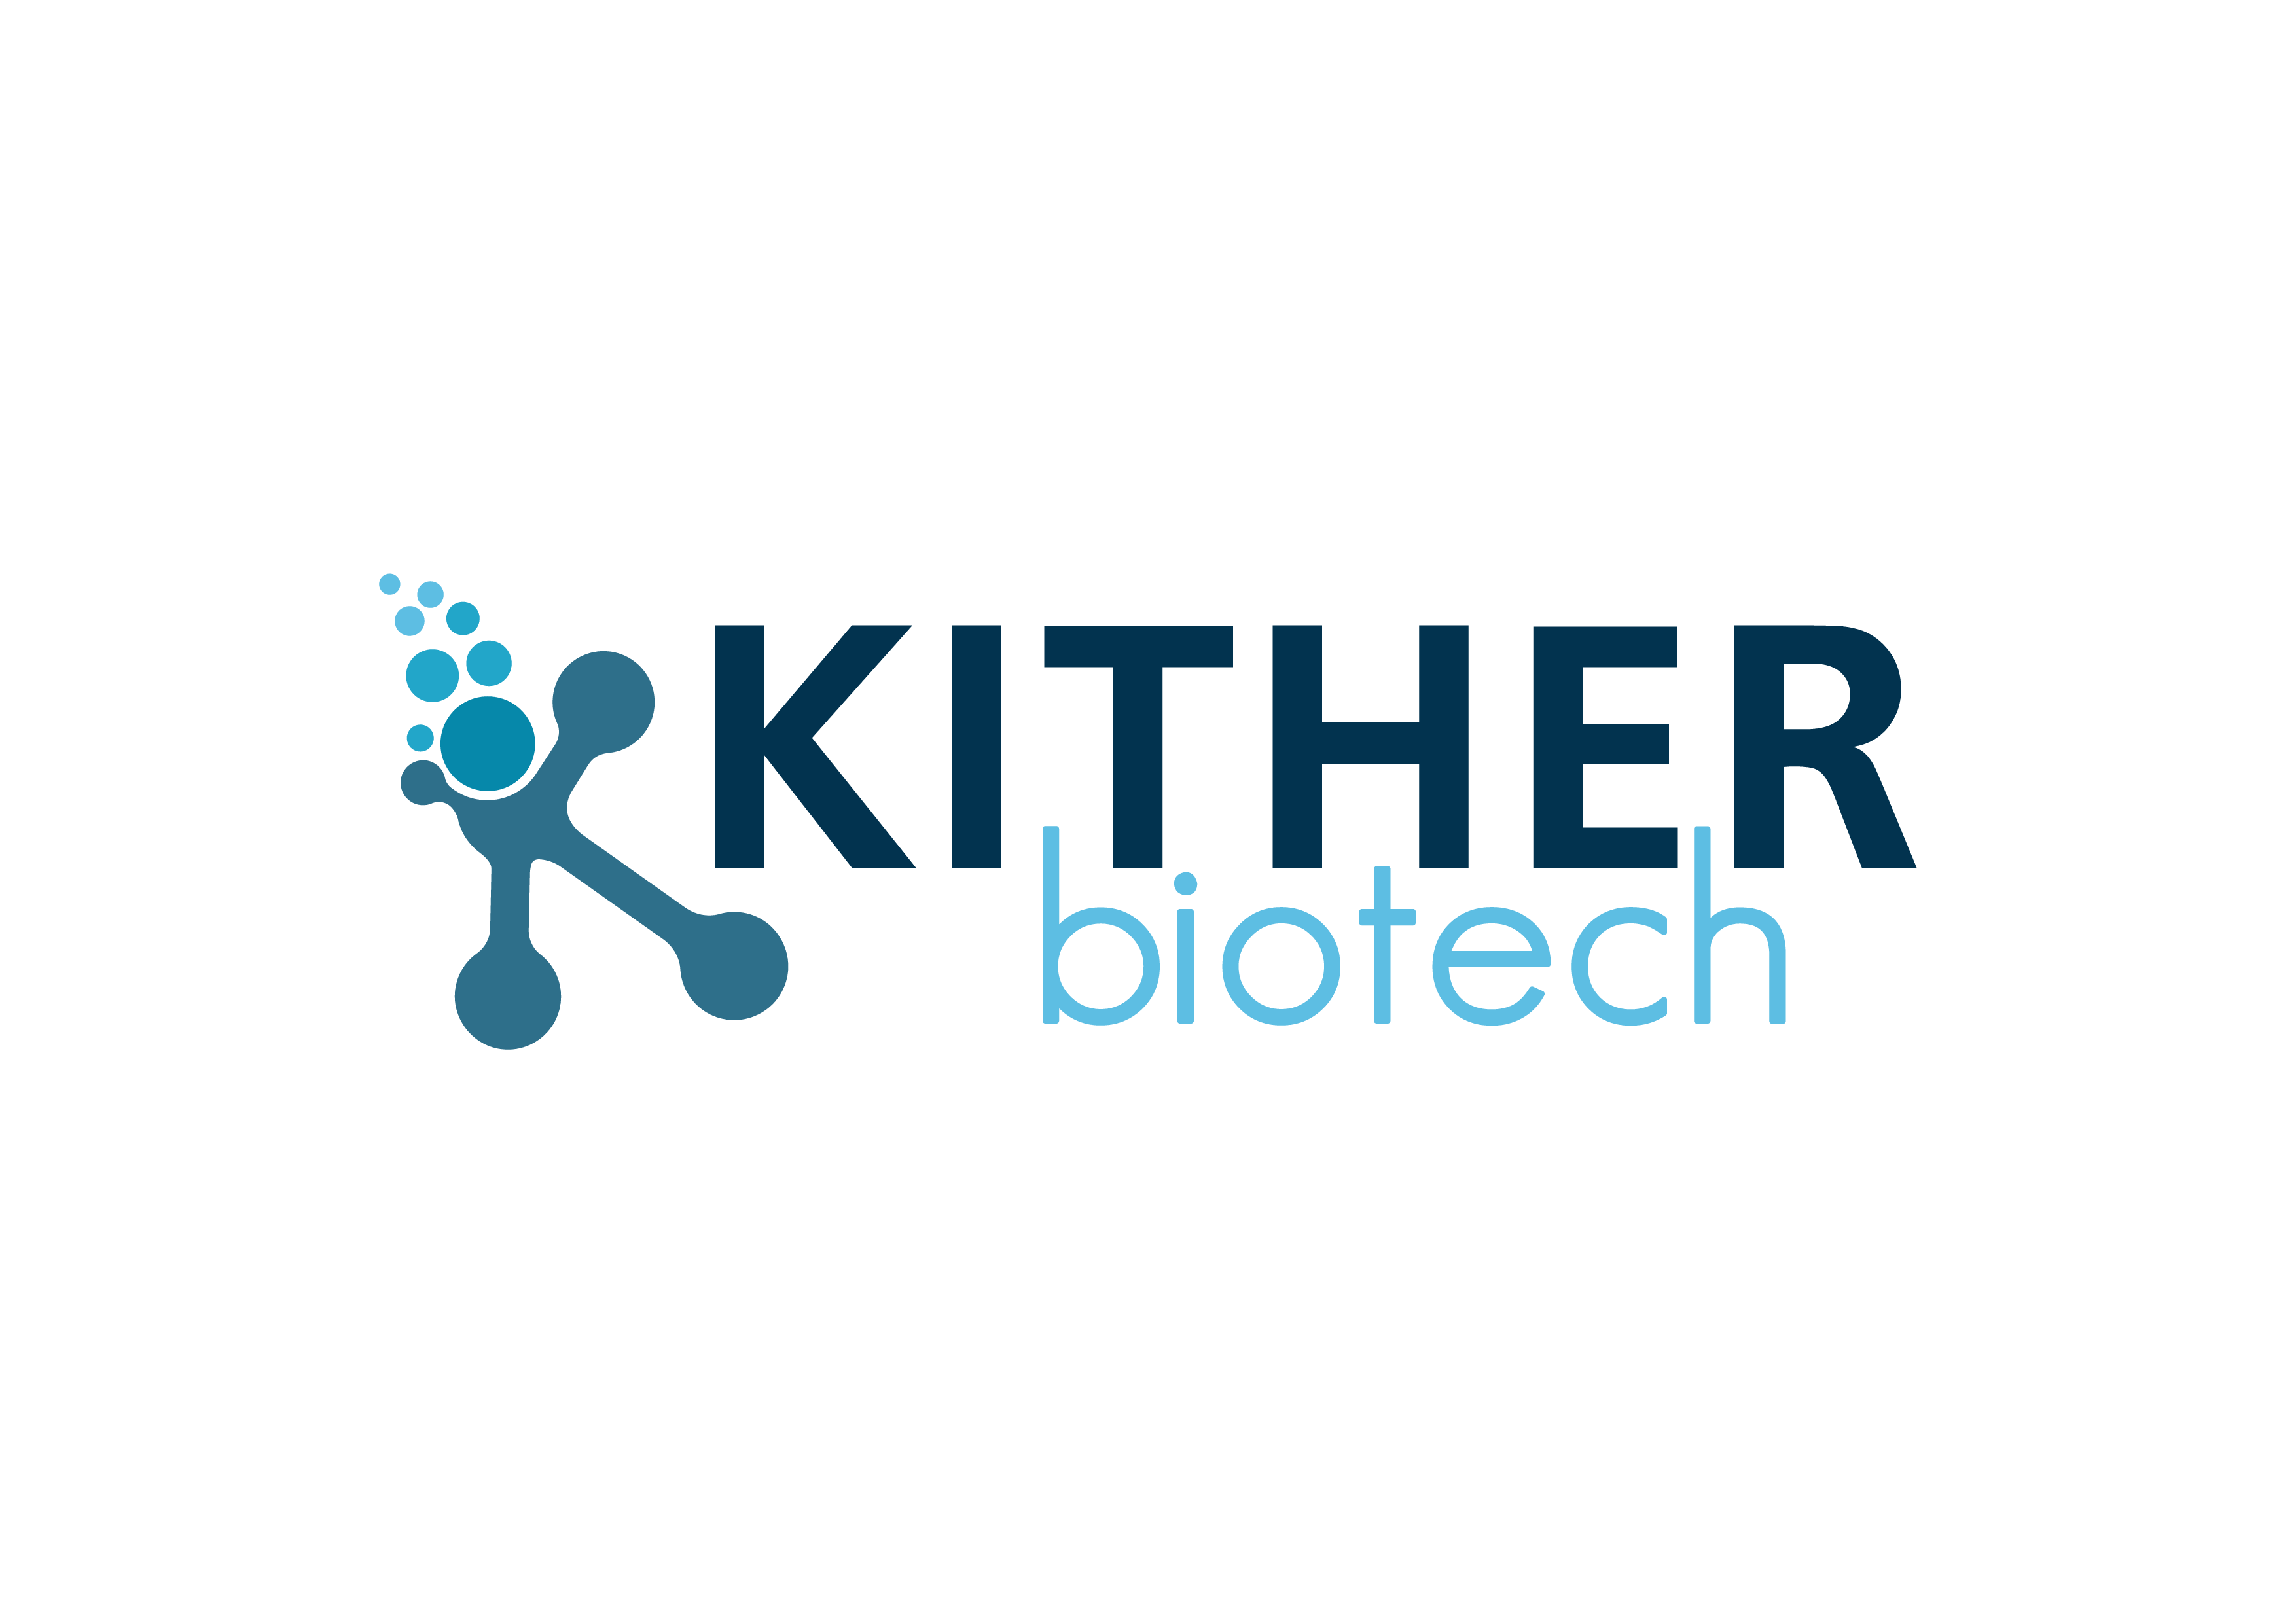 Kither Biotech